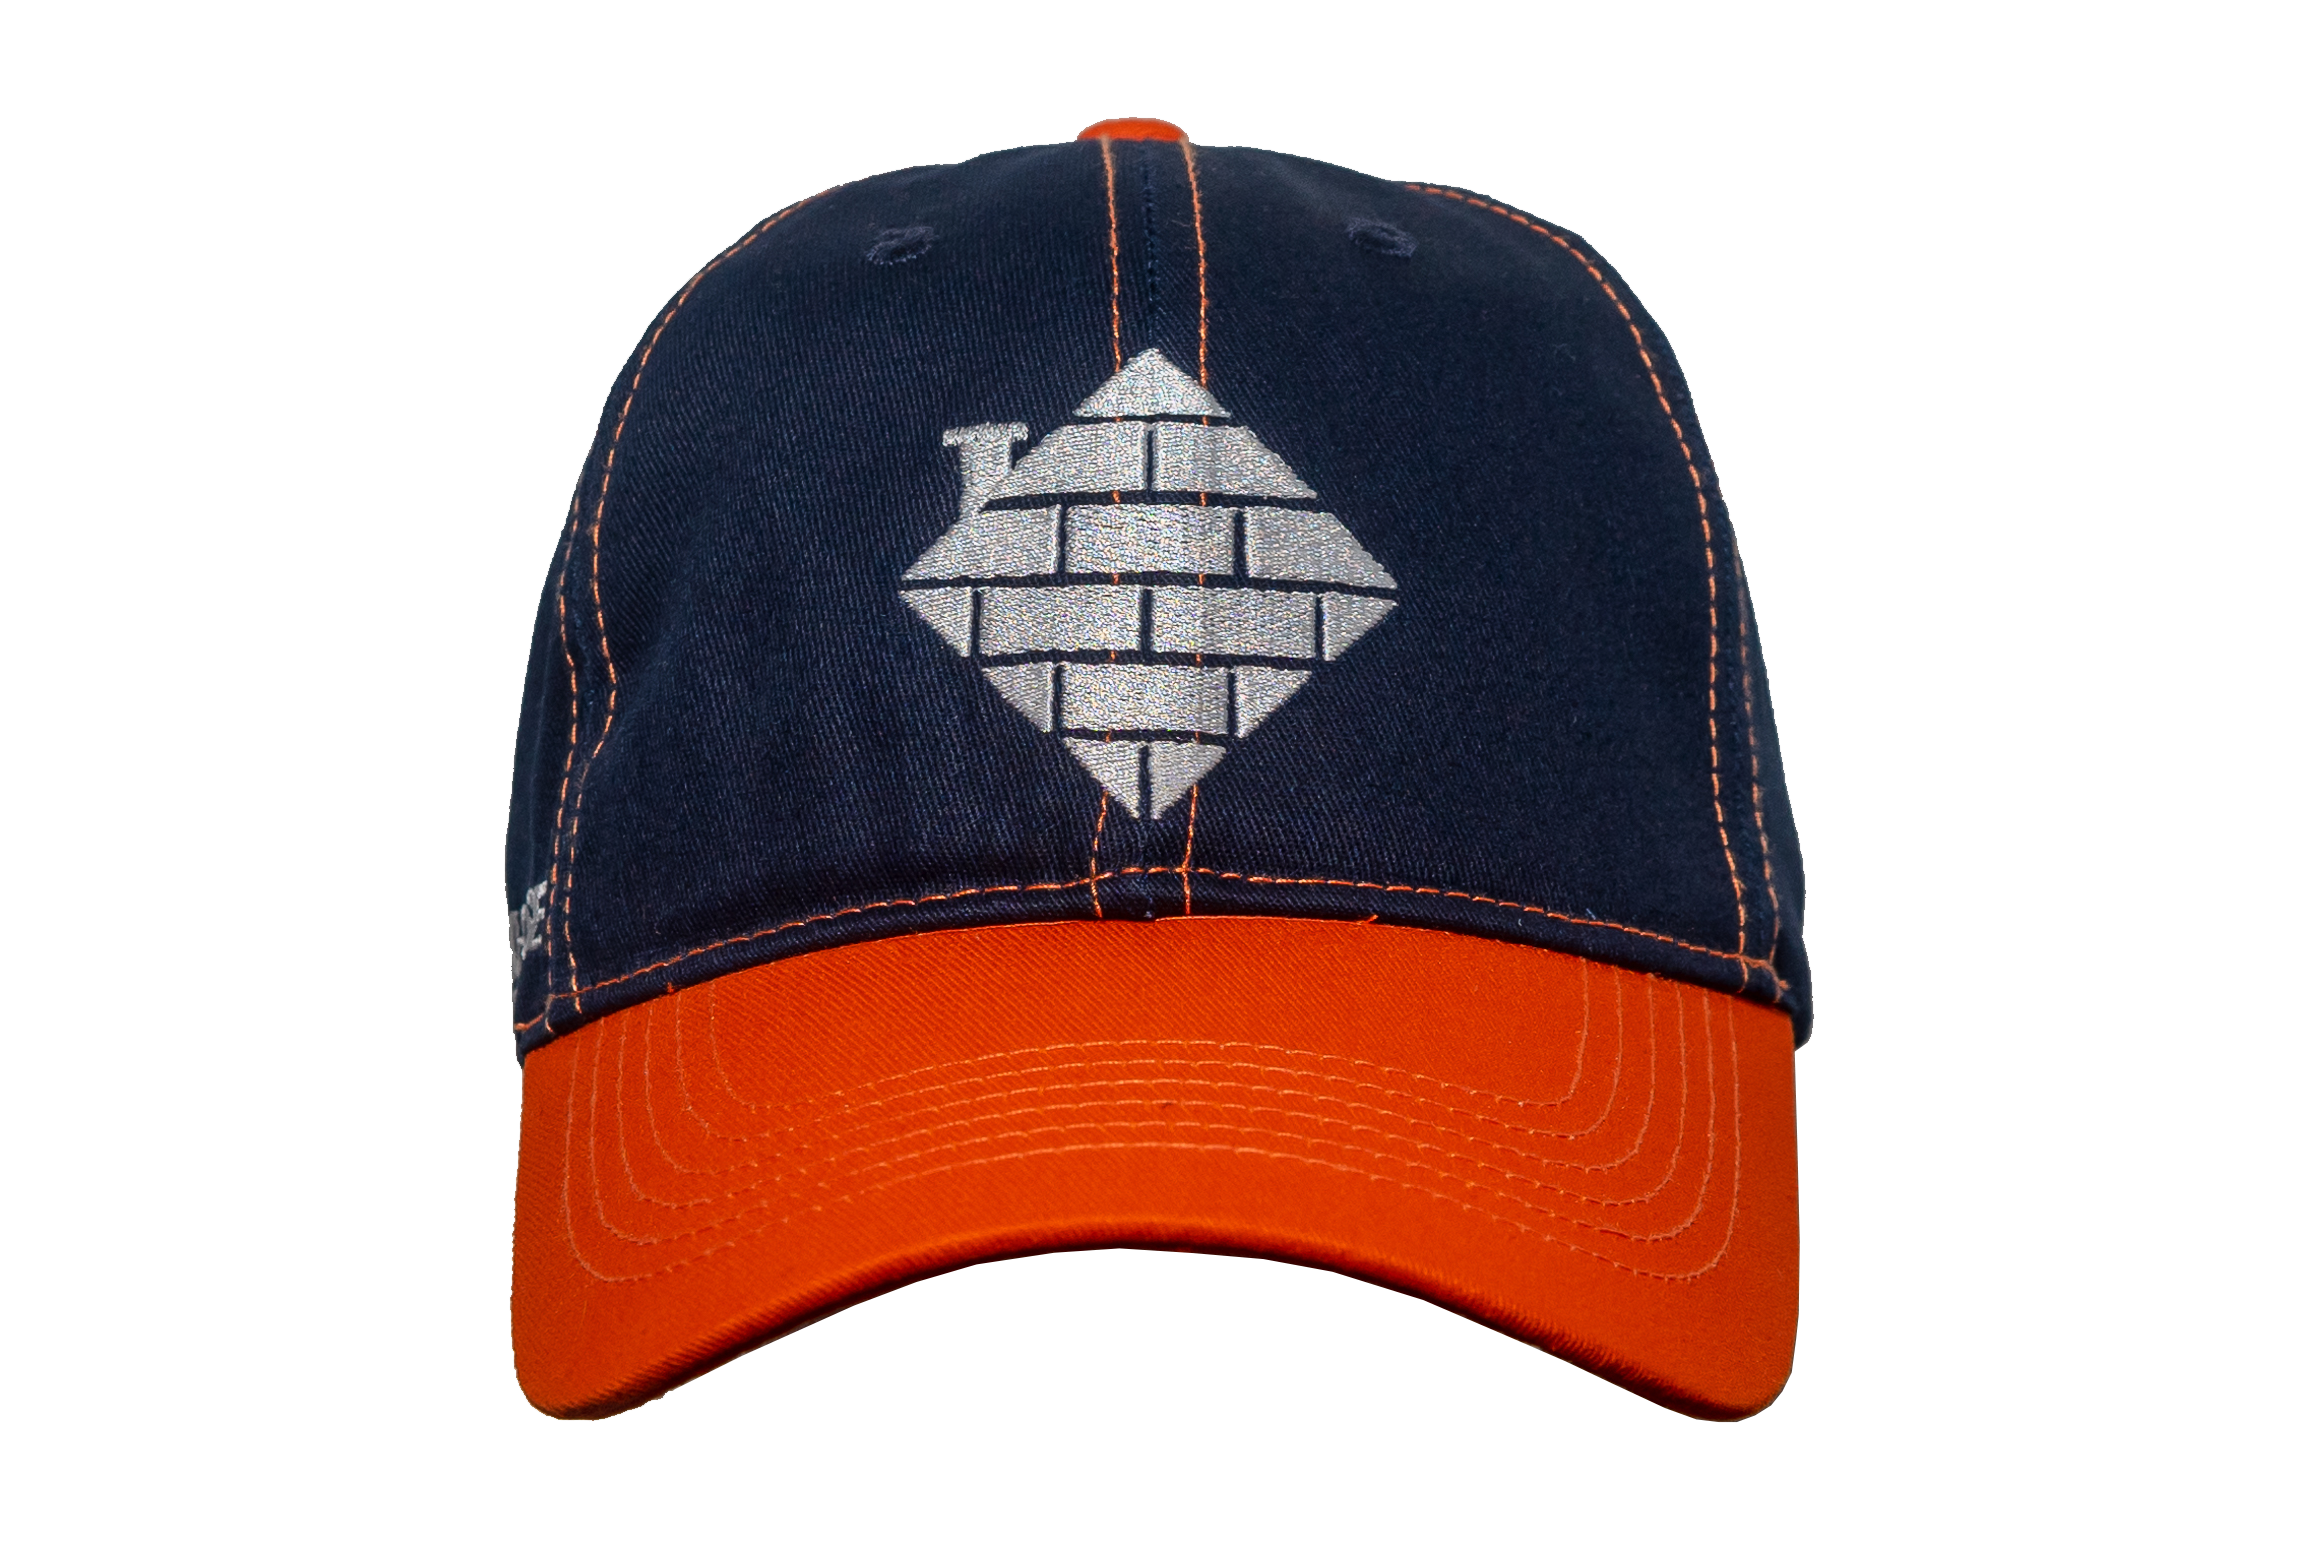 Brickhouse nutrition snapback hat logo blue front